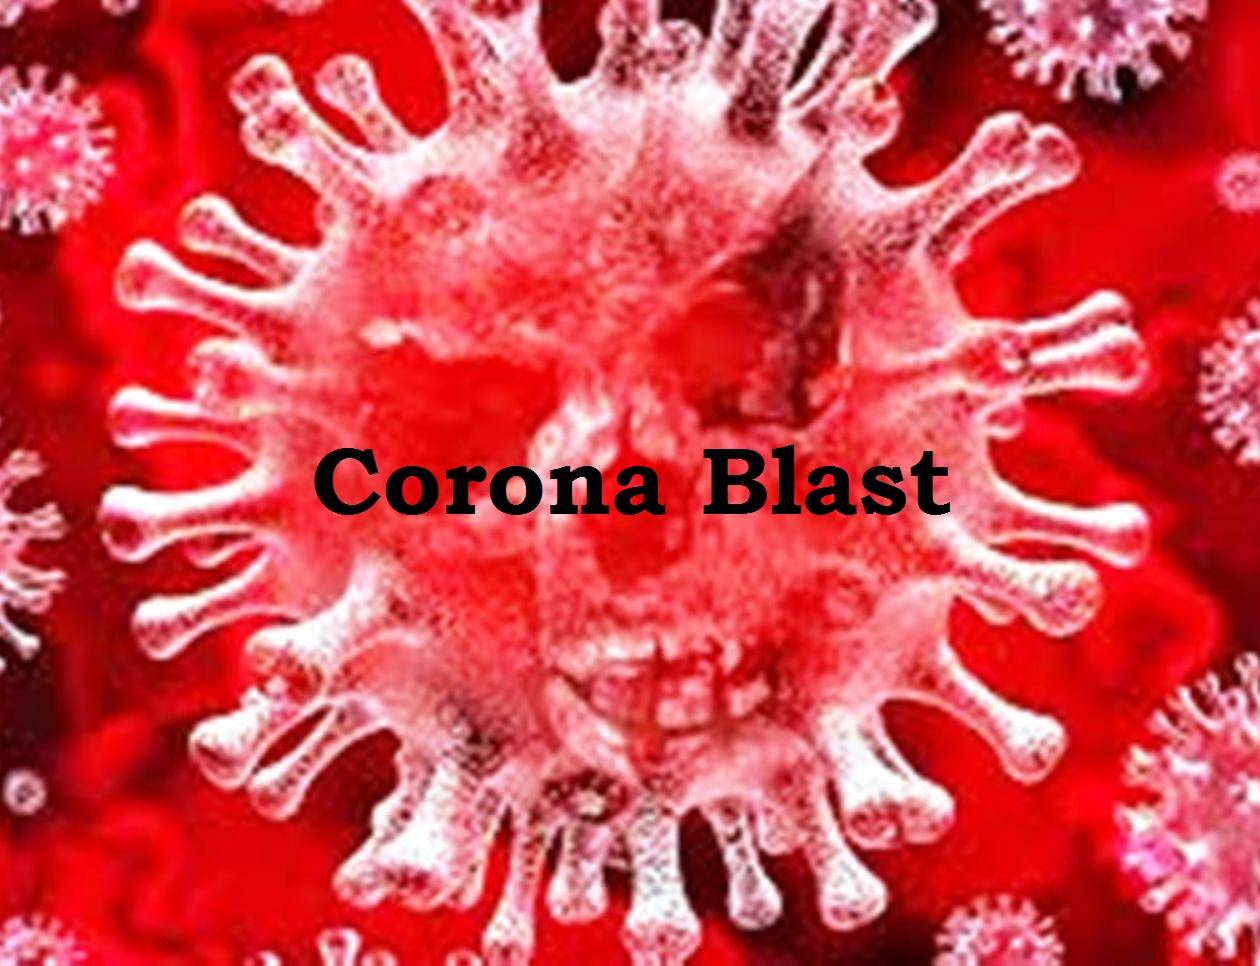 कोरोना अपडेट 6-10-2020: फिर कोरोना का धमाका आज 145 पॉजिटिव मिले